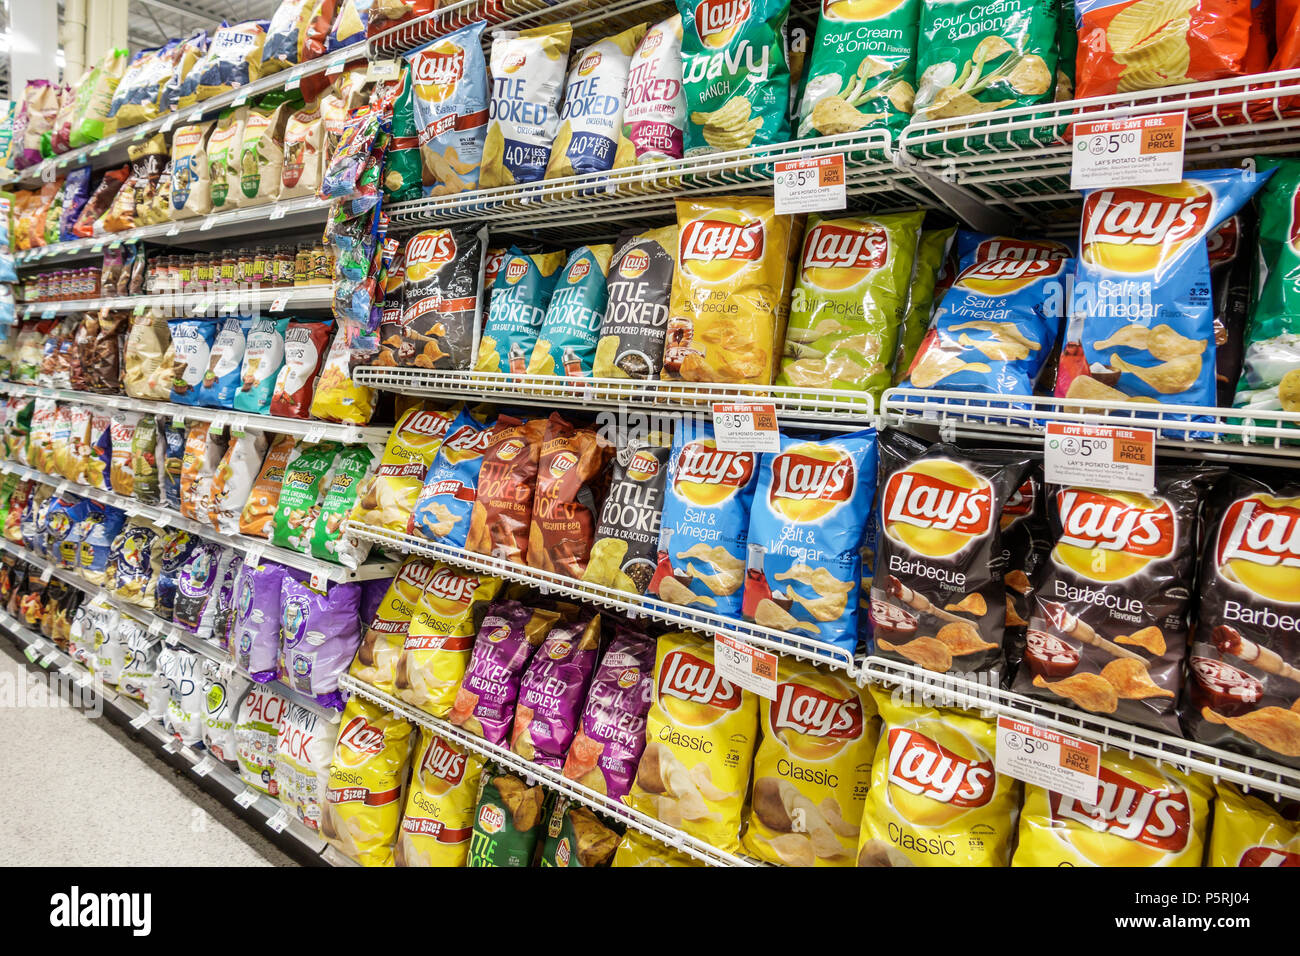 Stuart Florida,Publix grocery store supermarket food,interior inside,shelf shelves shelving,snacks,potato chips,Lay's,brand,shelves display sale,visit Stock Photo